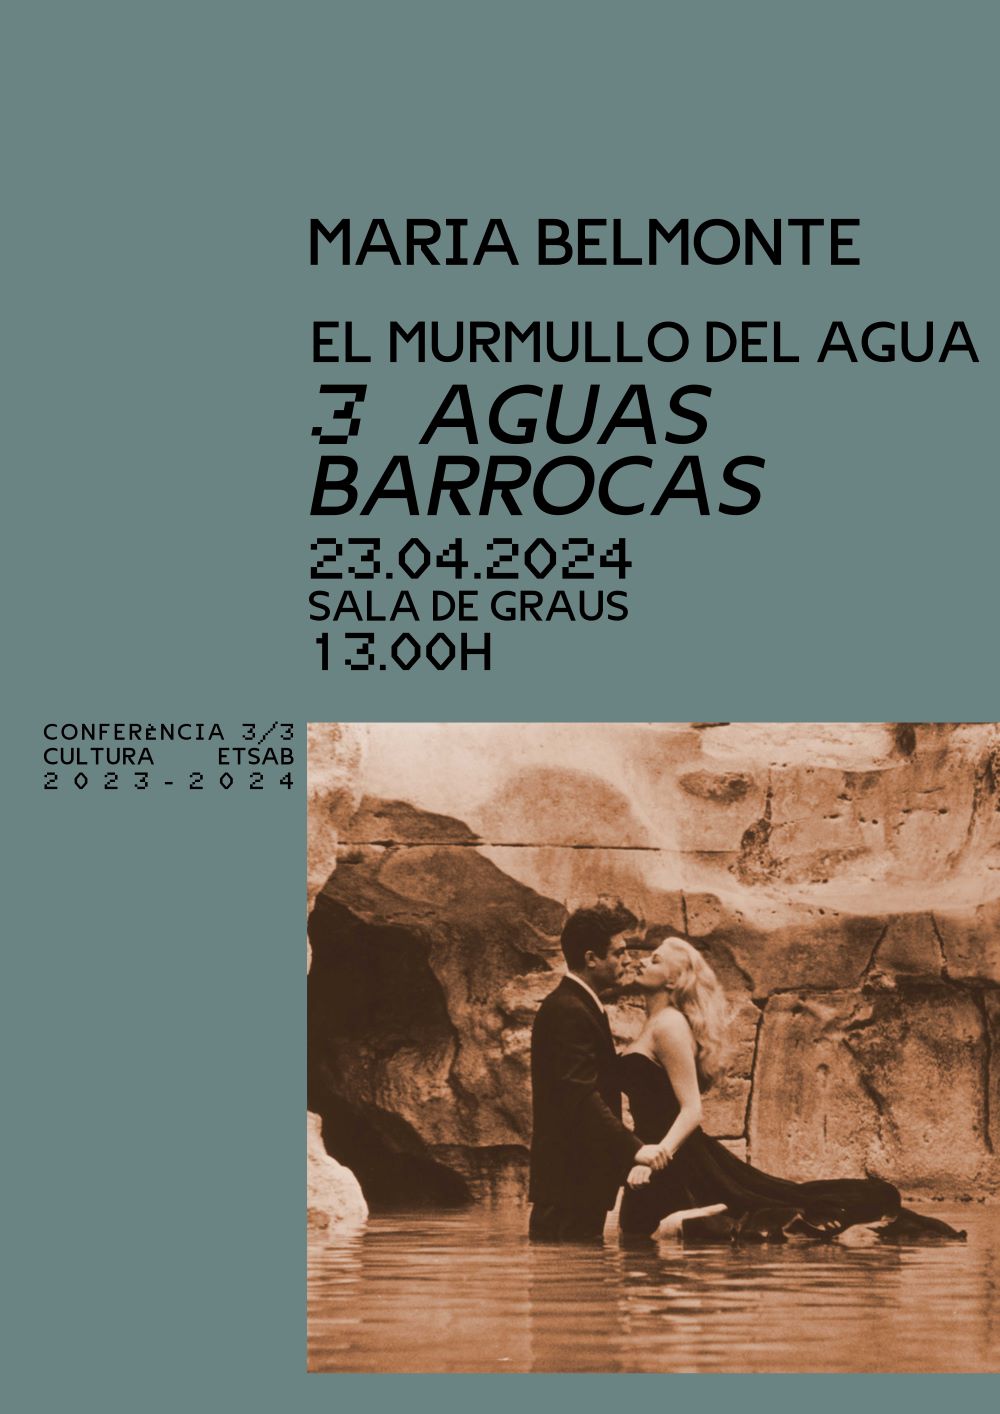 MARIA BELMONTE - EL MURMULLO DEL AGUA_03.jpg